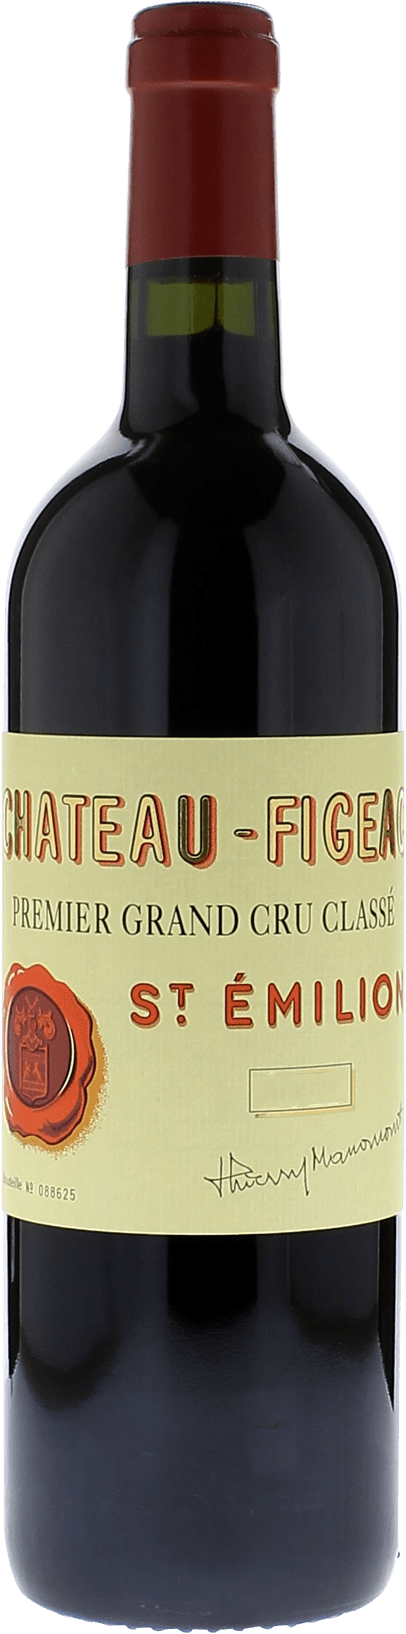 Figeac 1990 1er Grand cru B class Saint-Emilion, Bordeaux rouge